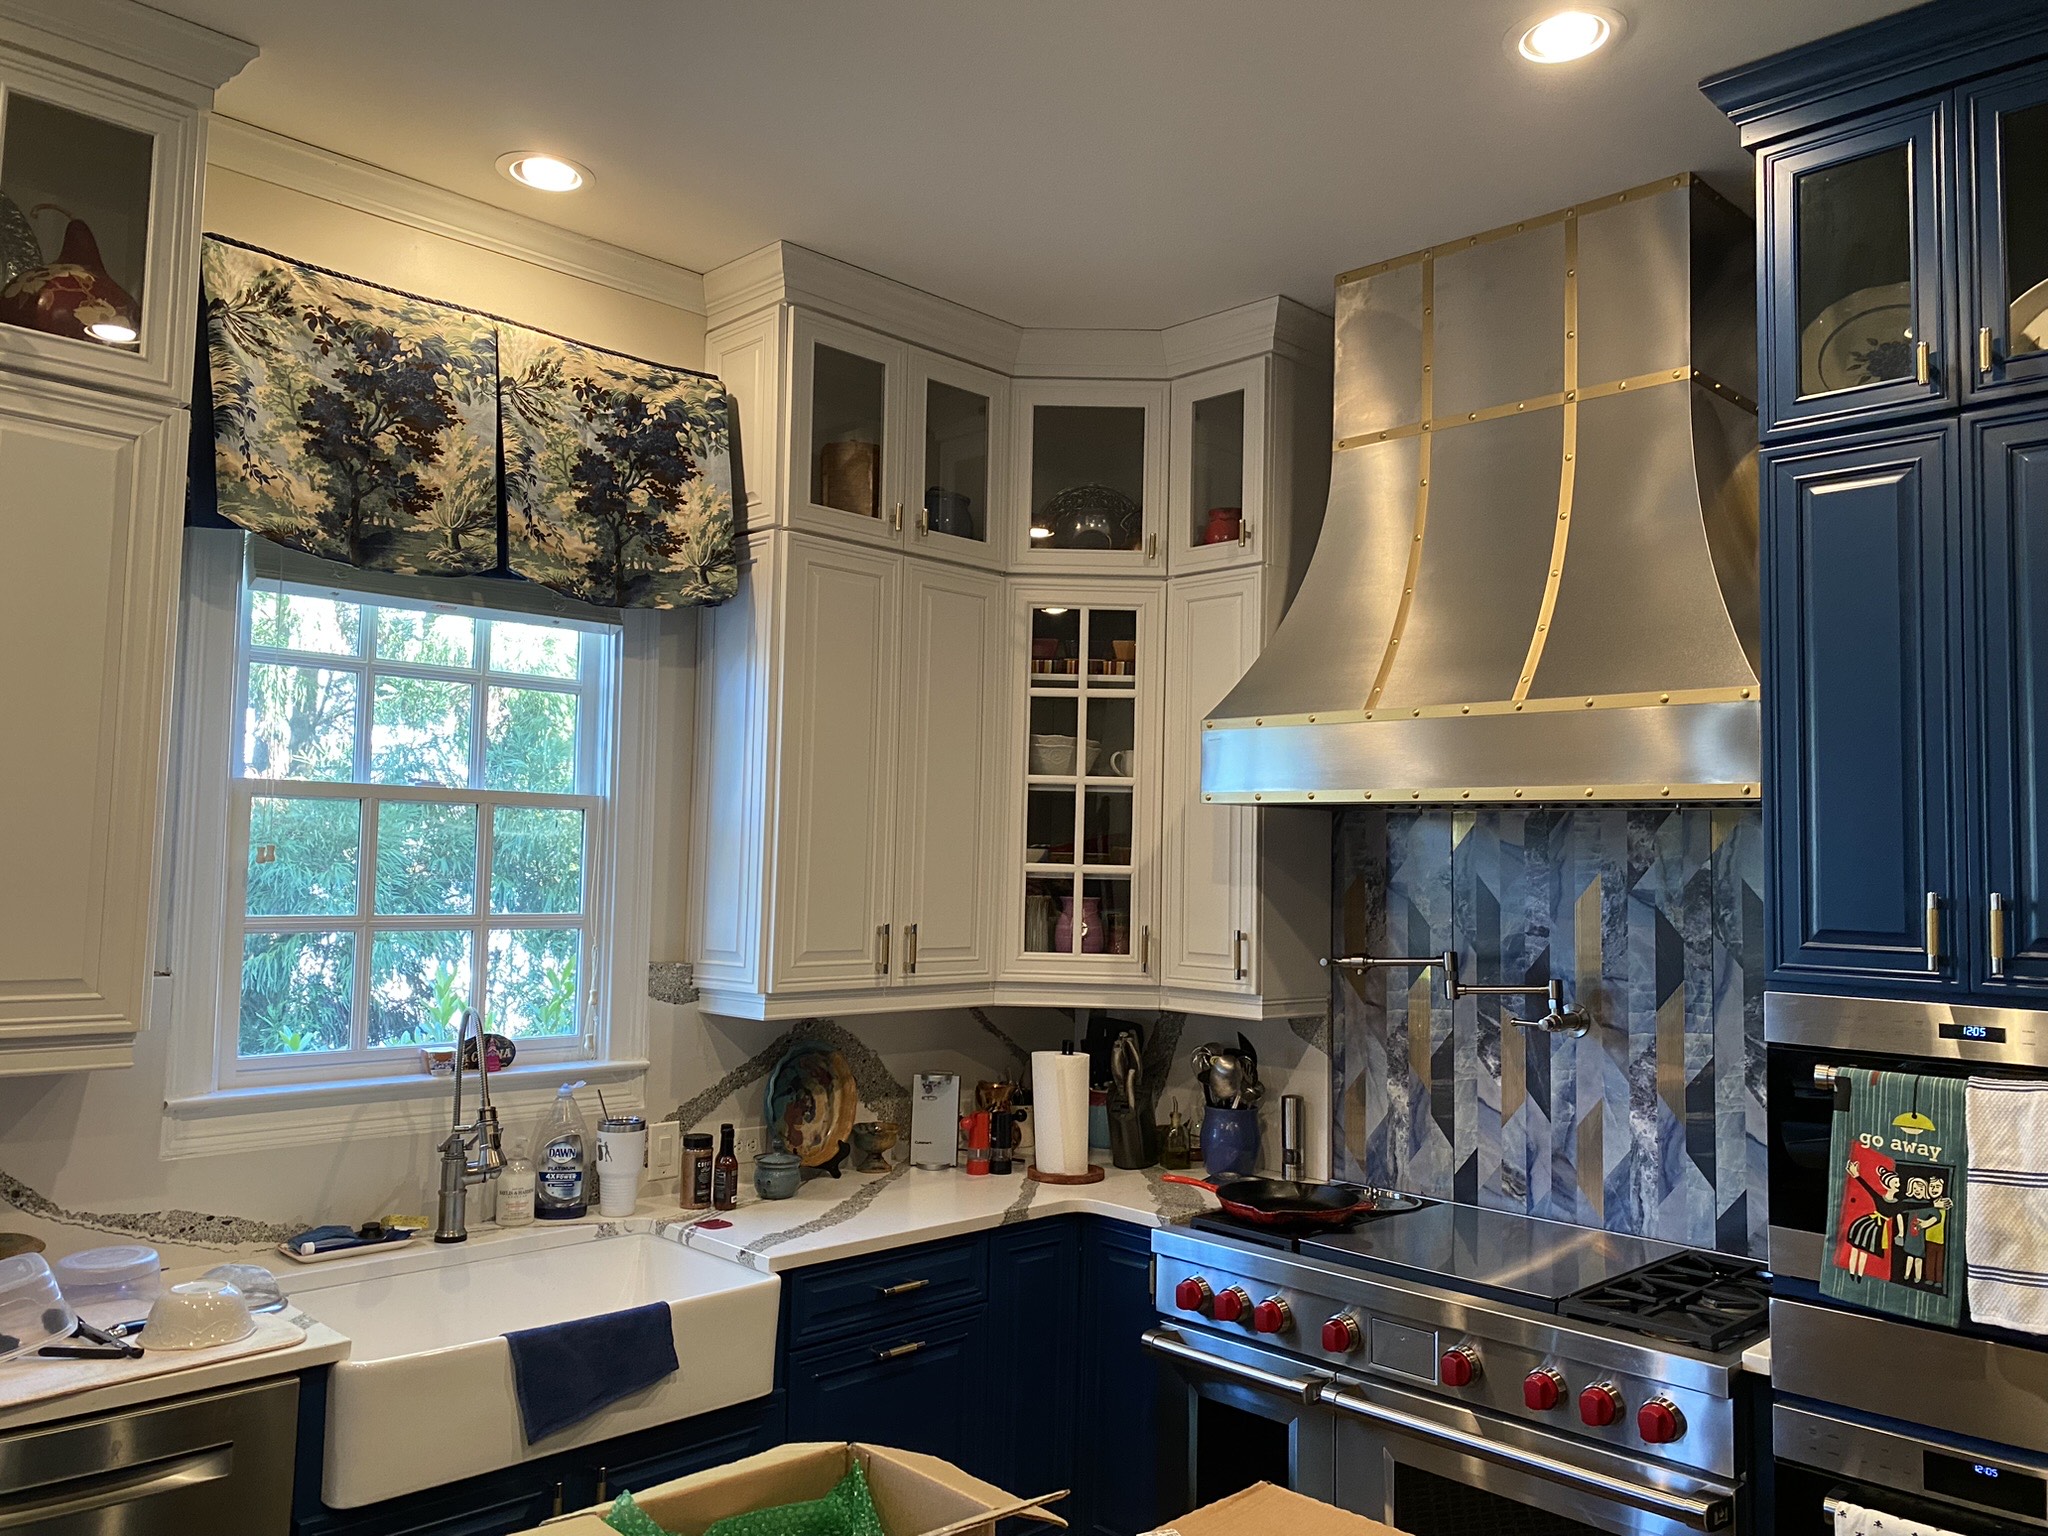 Remarkable kitchen design idea featuring blue kitchen cabinets, marble kitchen countertops, a marble backsplash